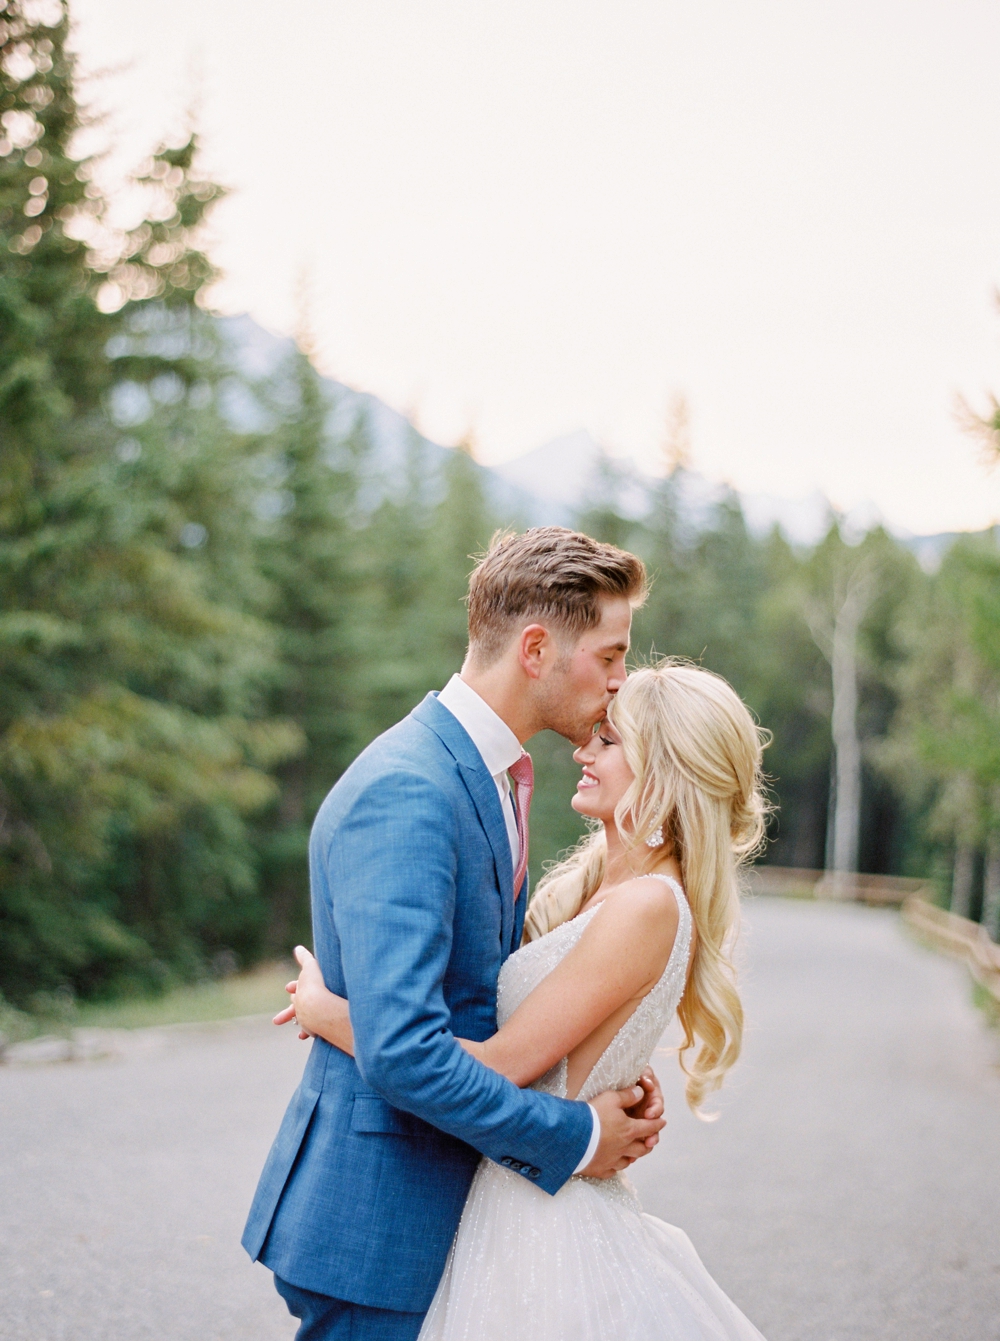 Bride and Groom portrait at Fairmont Banff Springs Hotel | Banff Rocky Mountain Wedding Photographers | Justine Milton fine art film photography